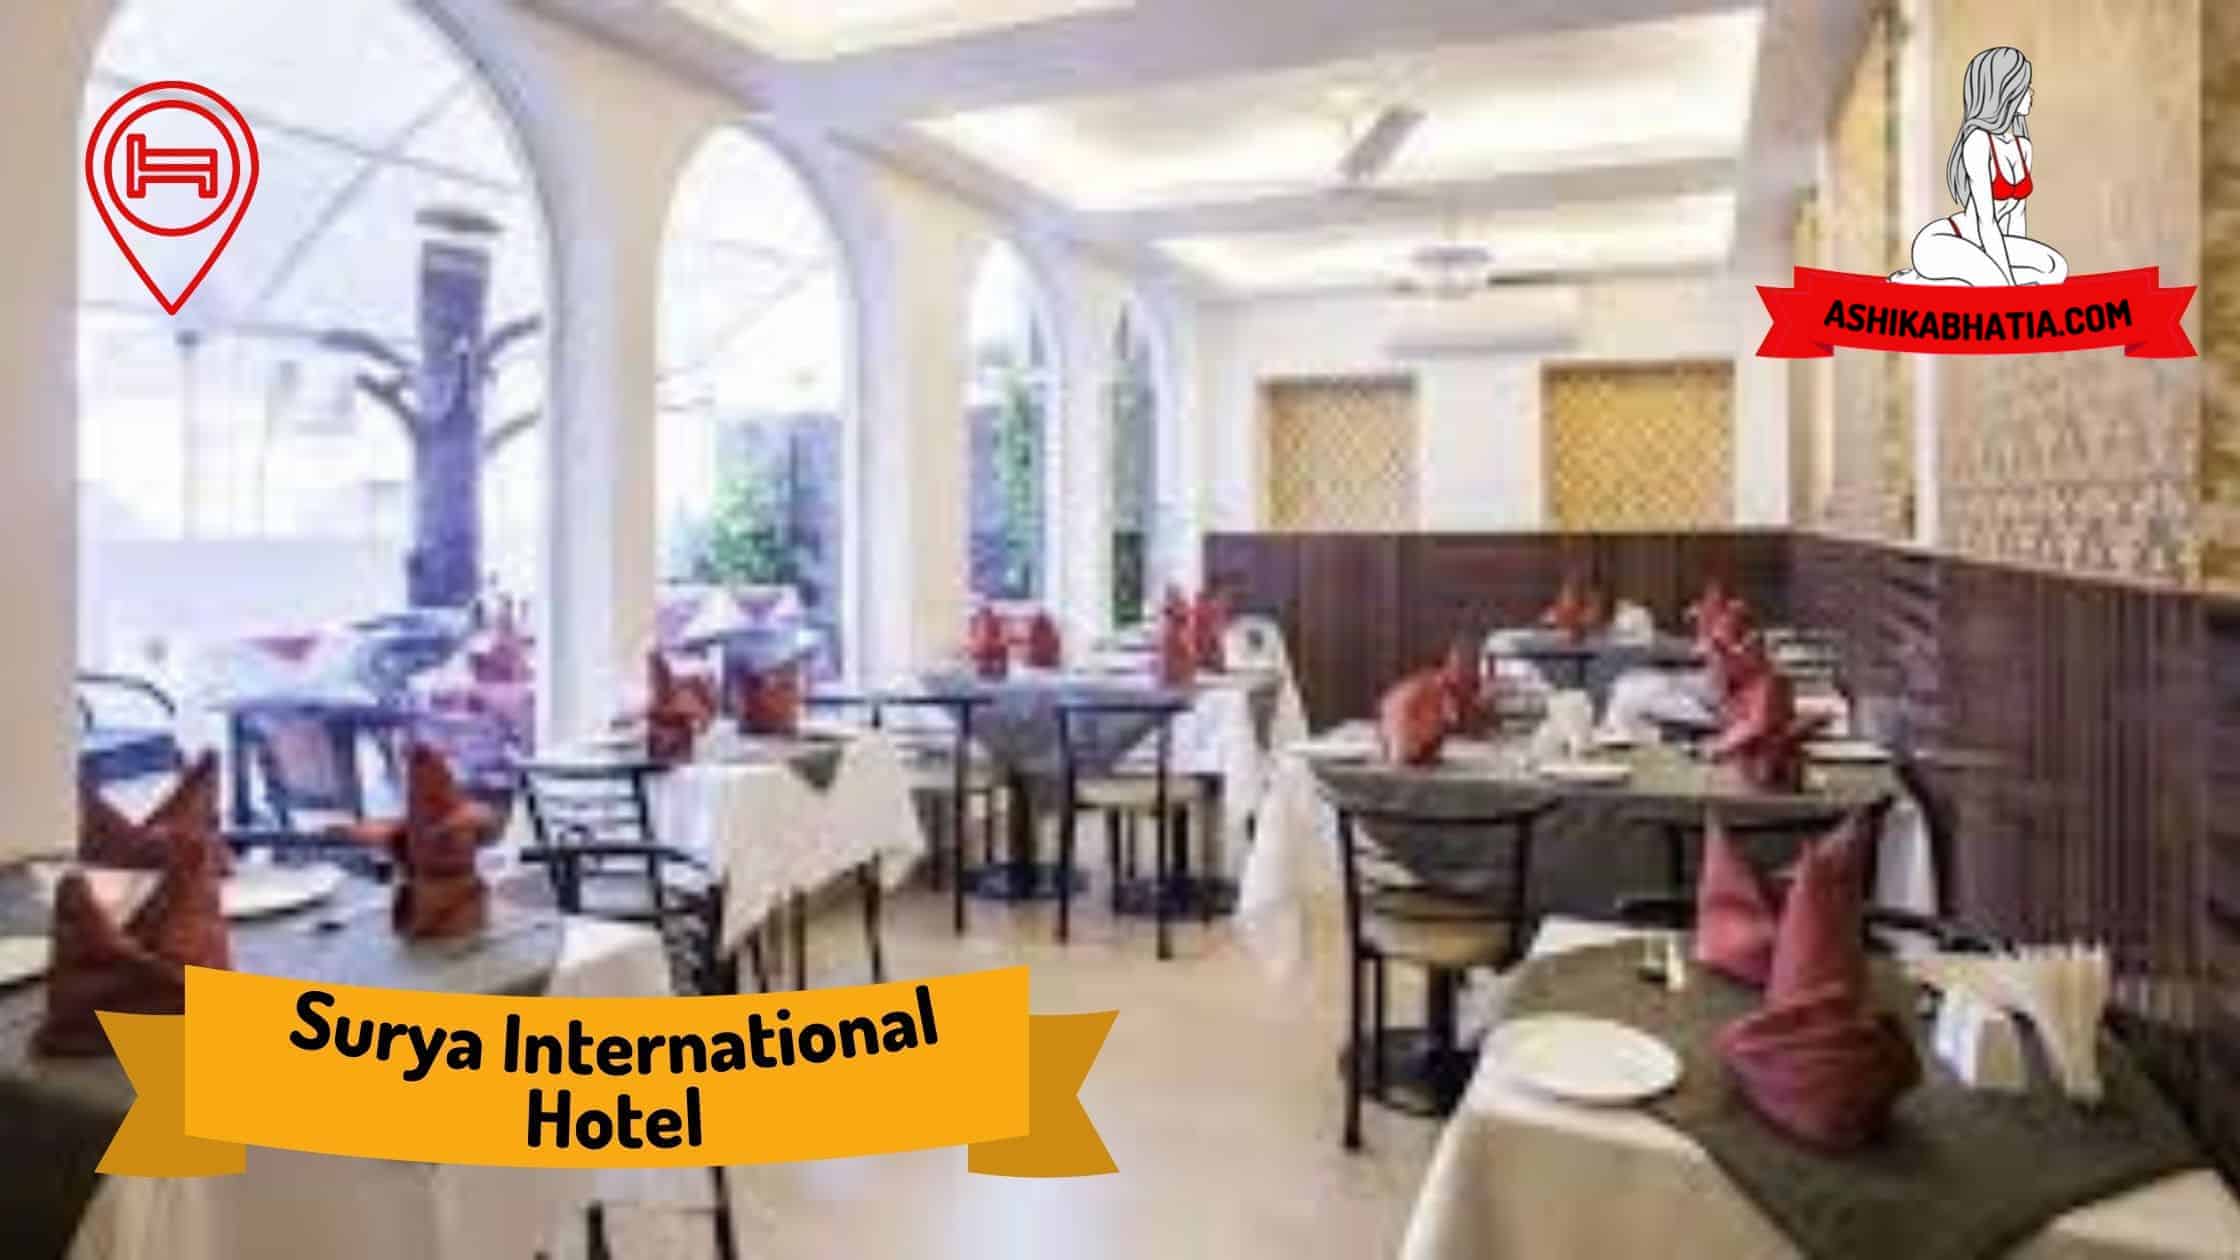 Surya International Hotel Escorts